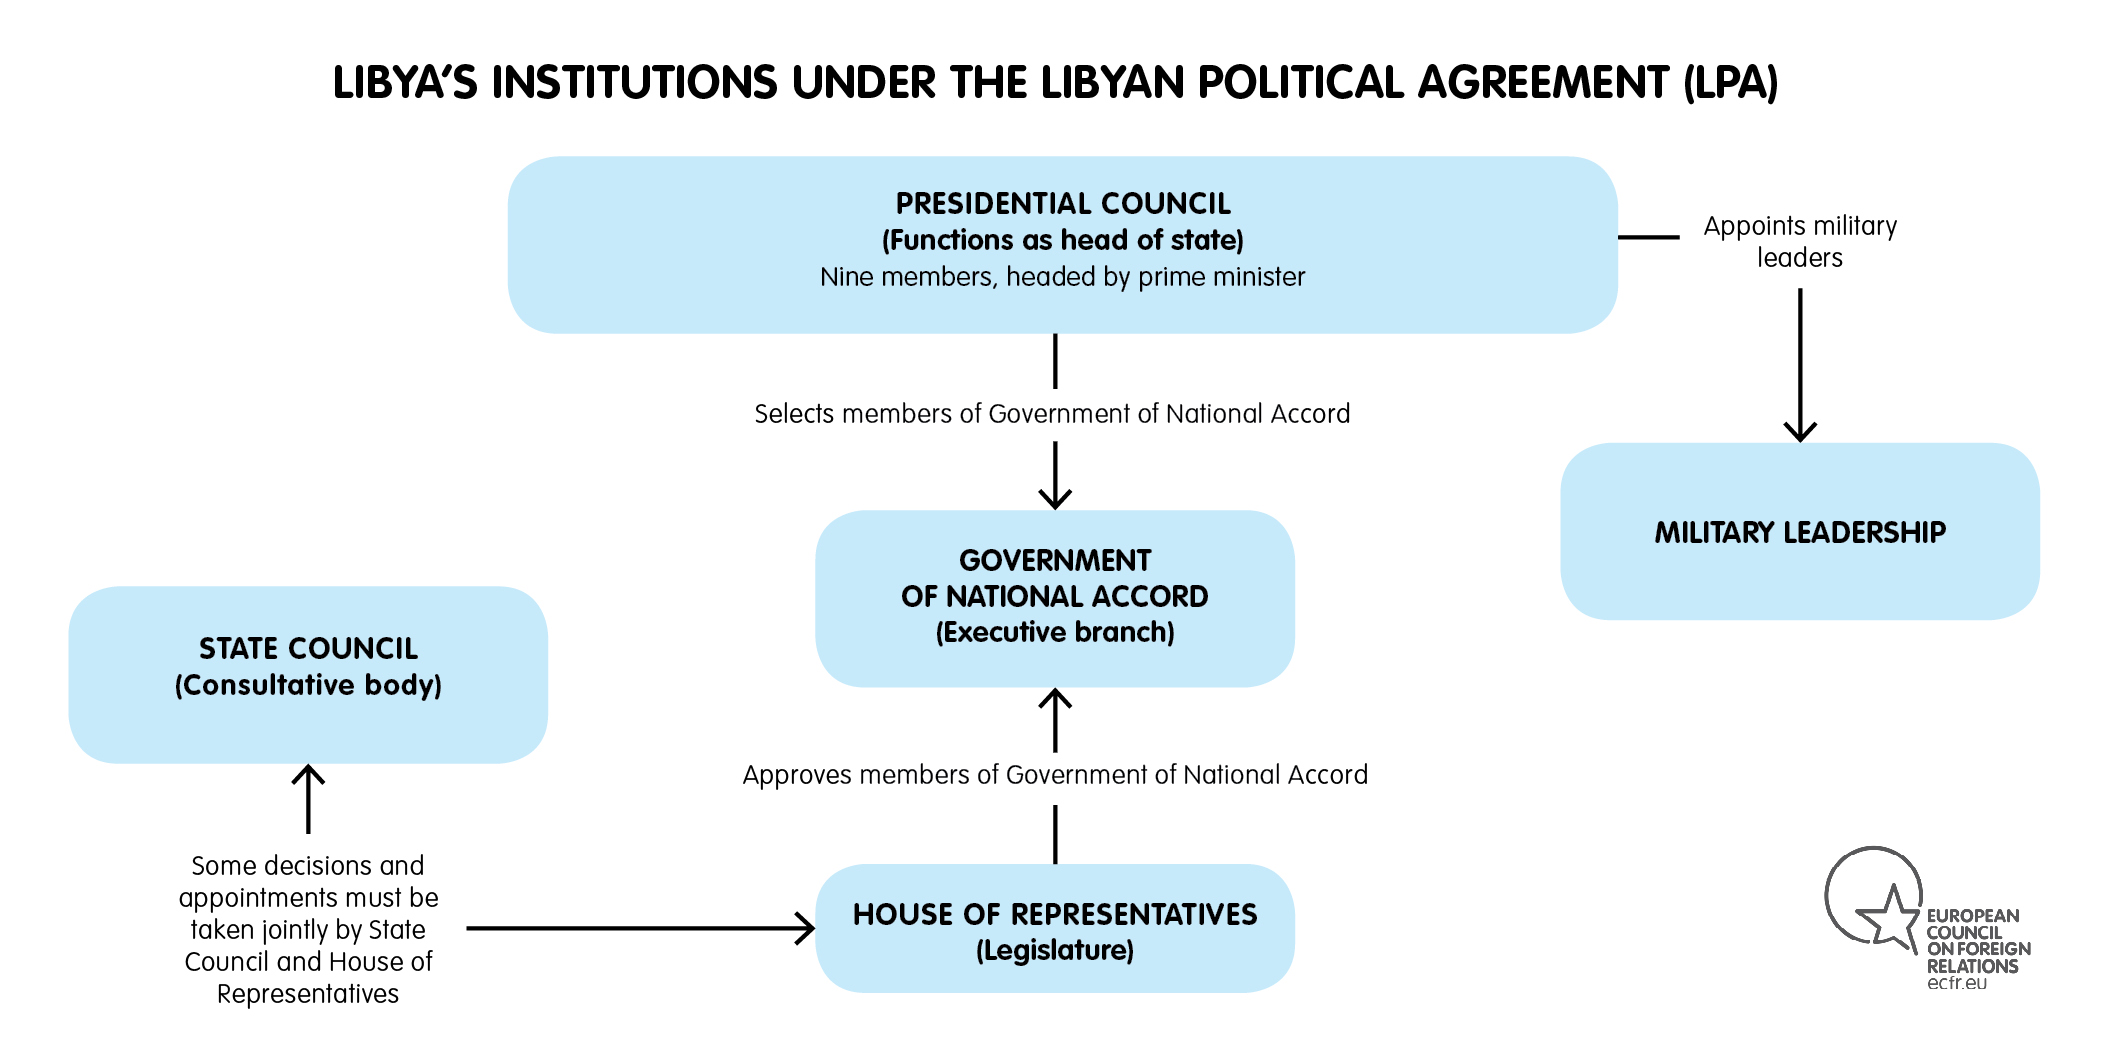 LIBYA INSTITUTIONS UNDER THE LPA 2016